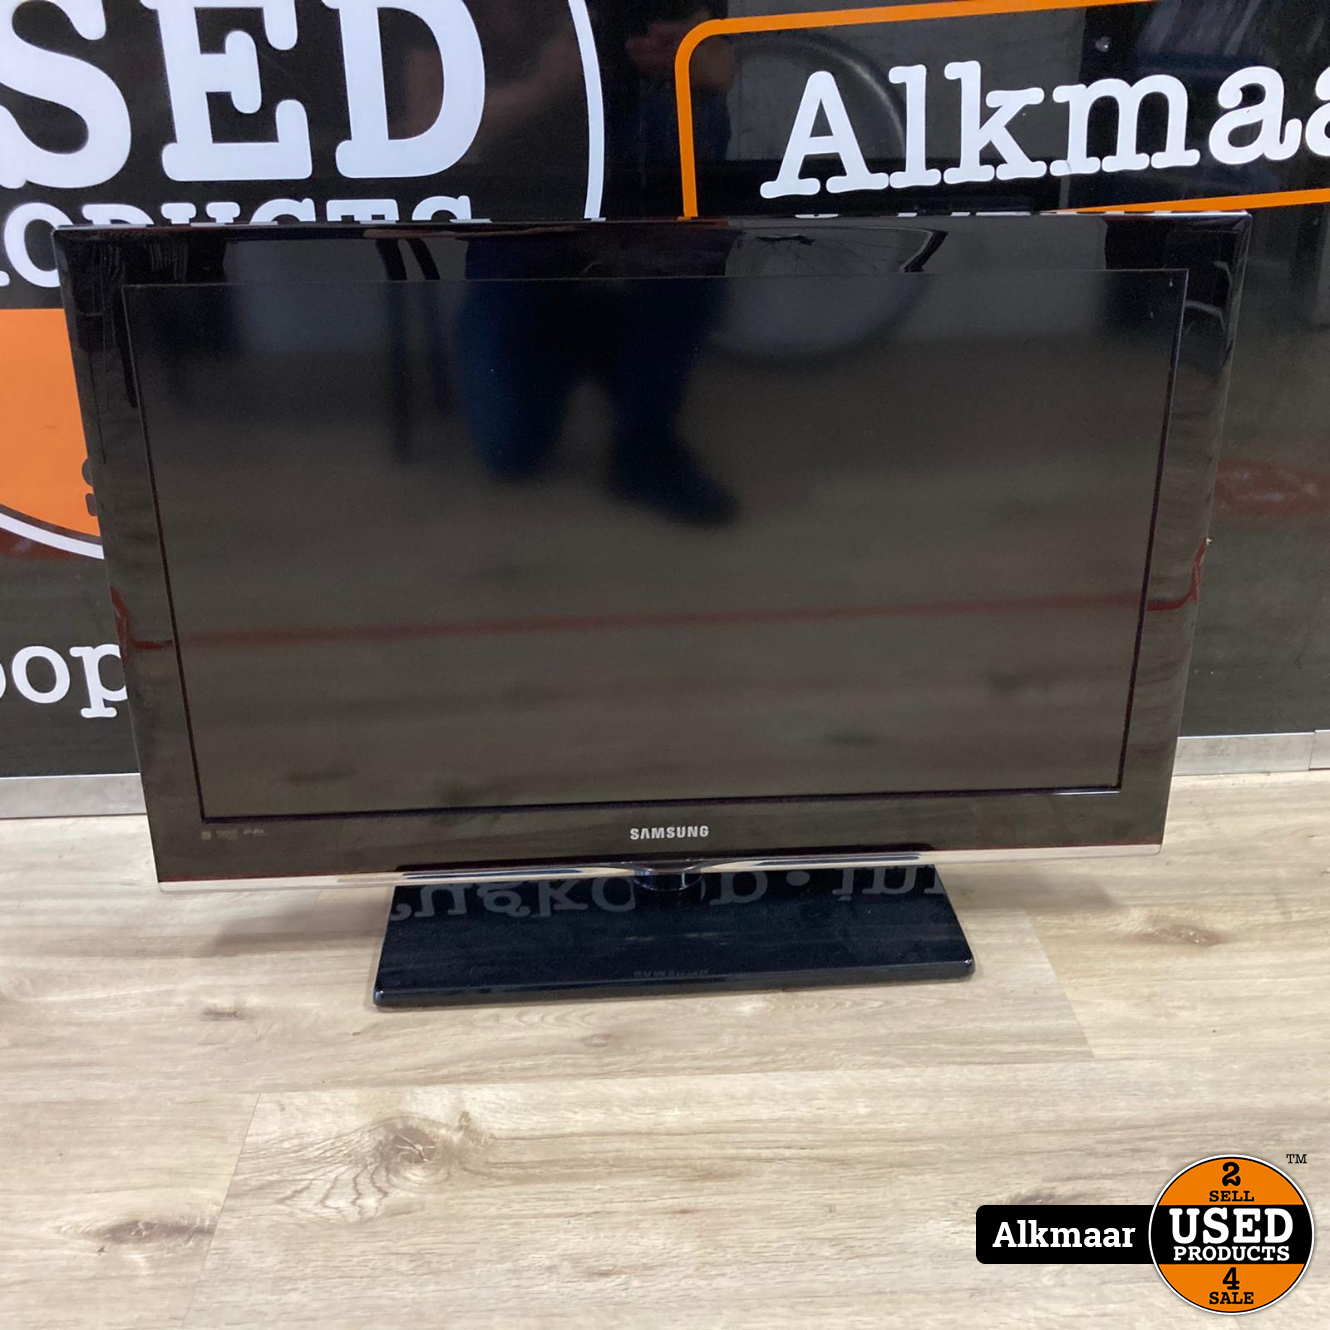 Samsung LE32C530 32 Inch TV + - Used Products Alkmaar